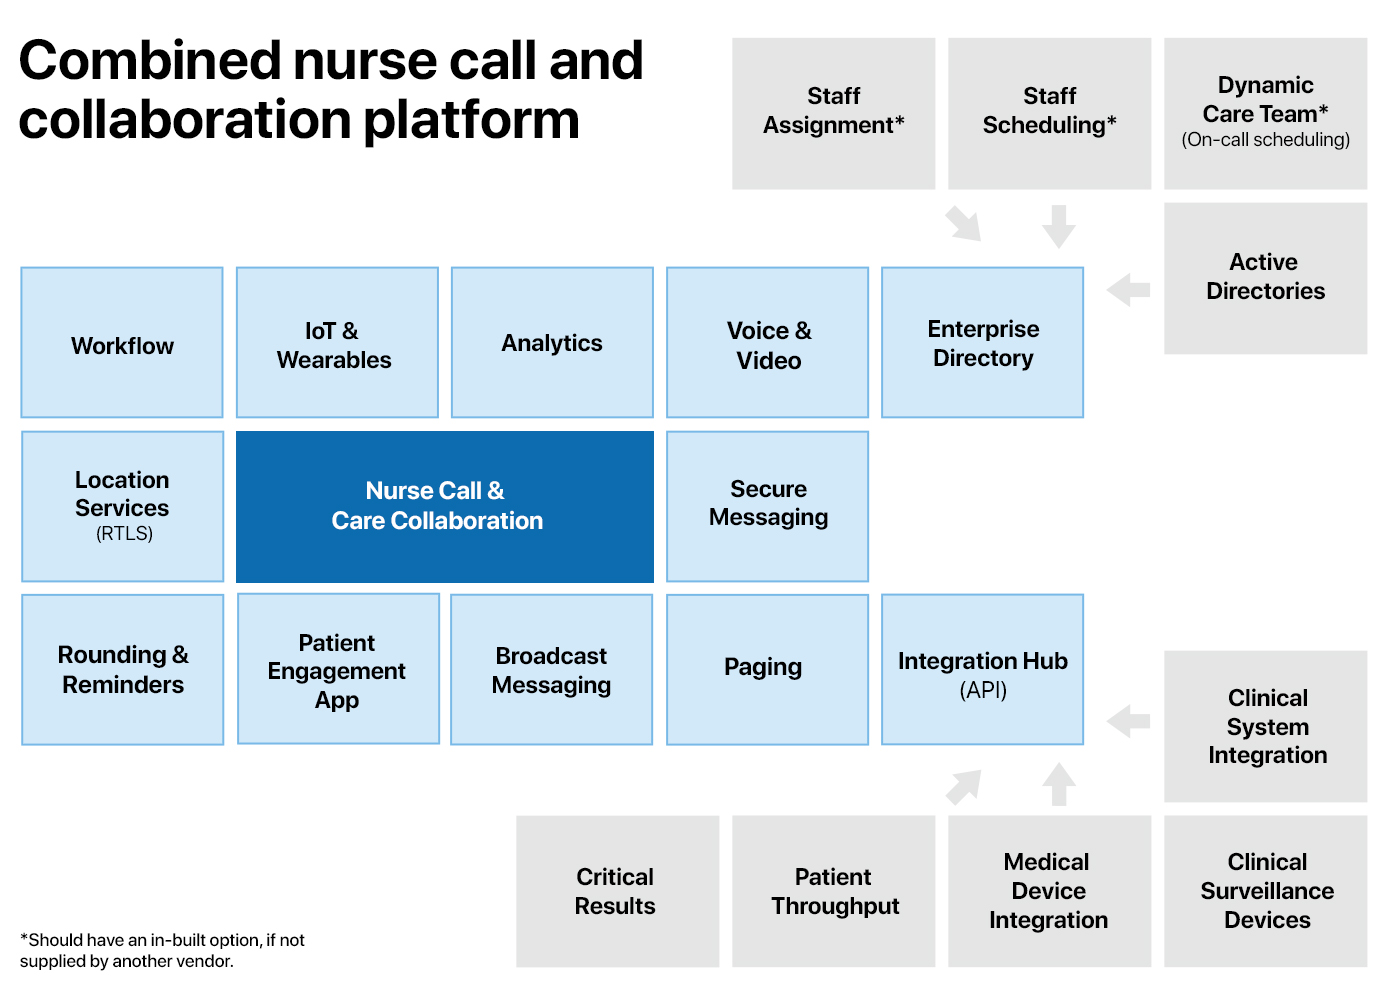 Combined nurse call and care team collaboration platform.